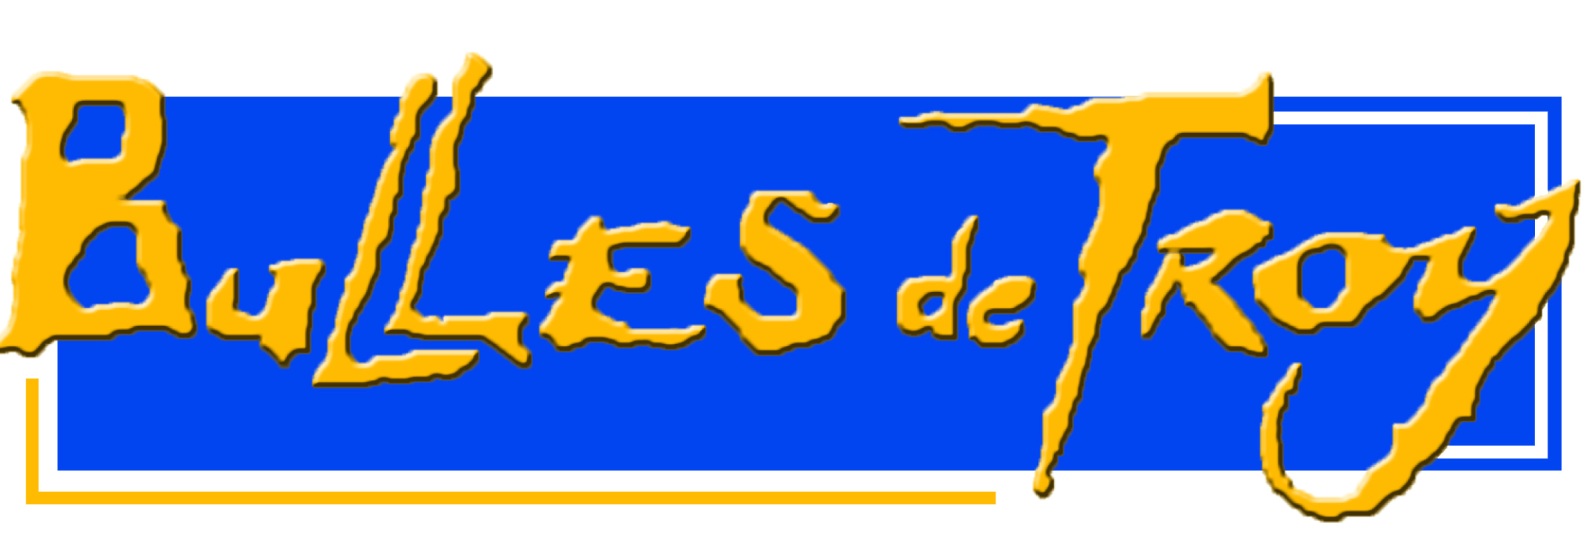 Logo de BULLES DE TROY